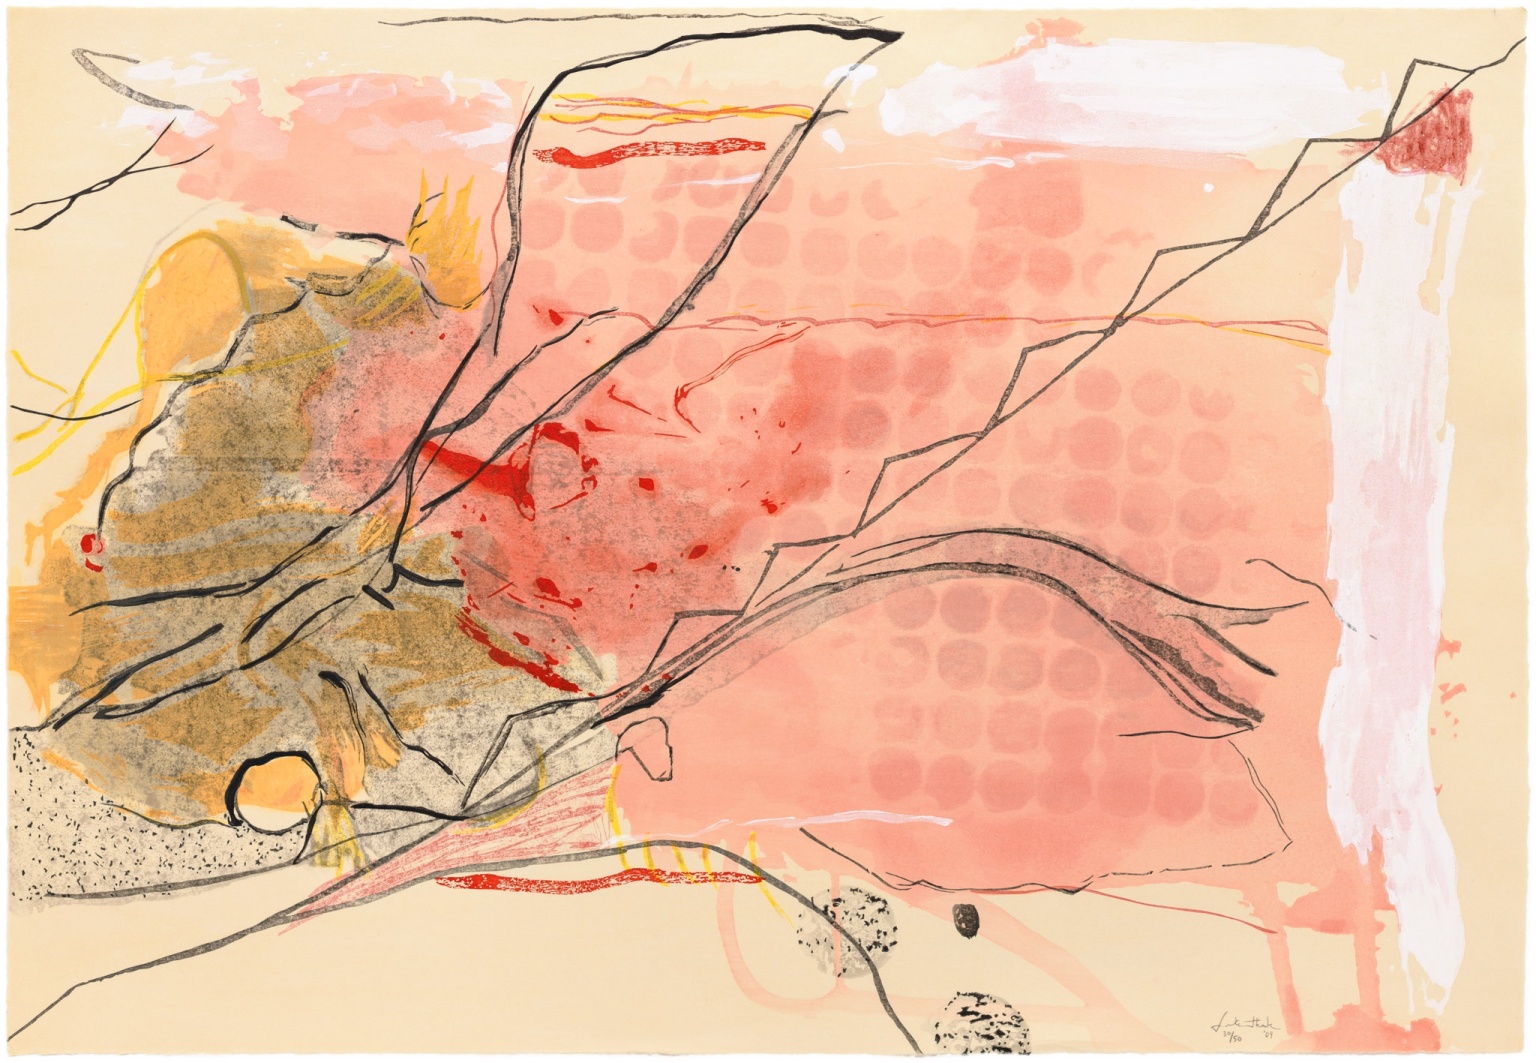 "Weeping Crabapple" (2009) by Helen Frankenthaler